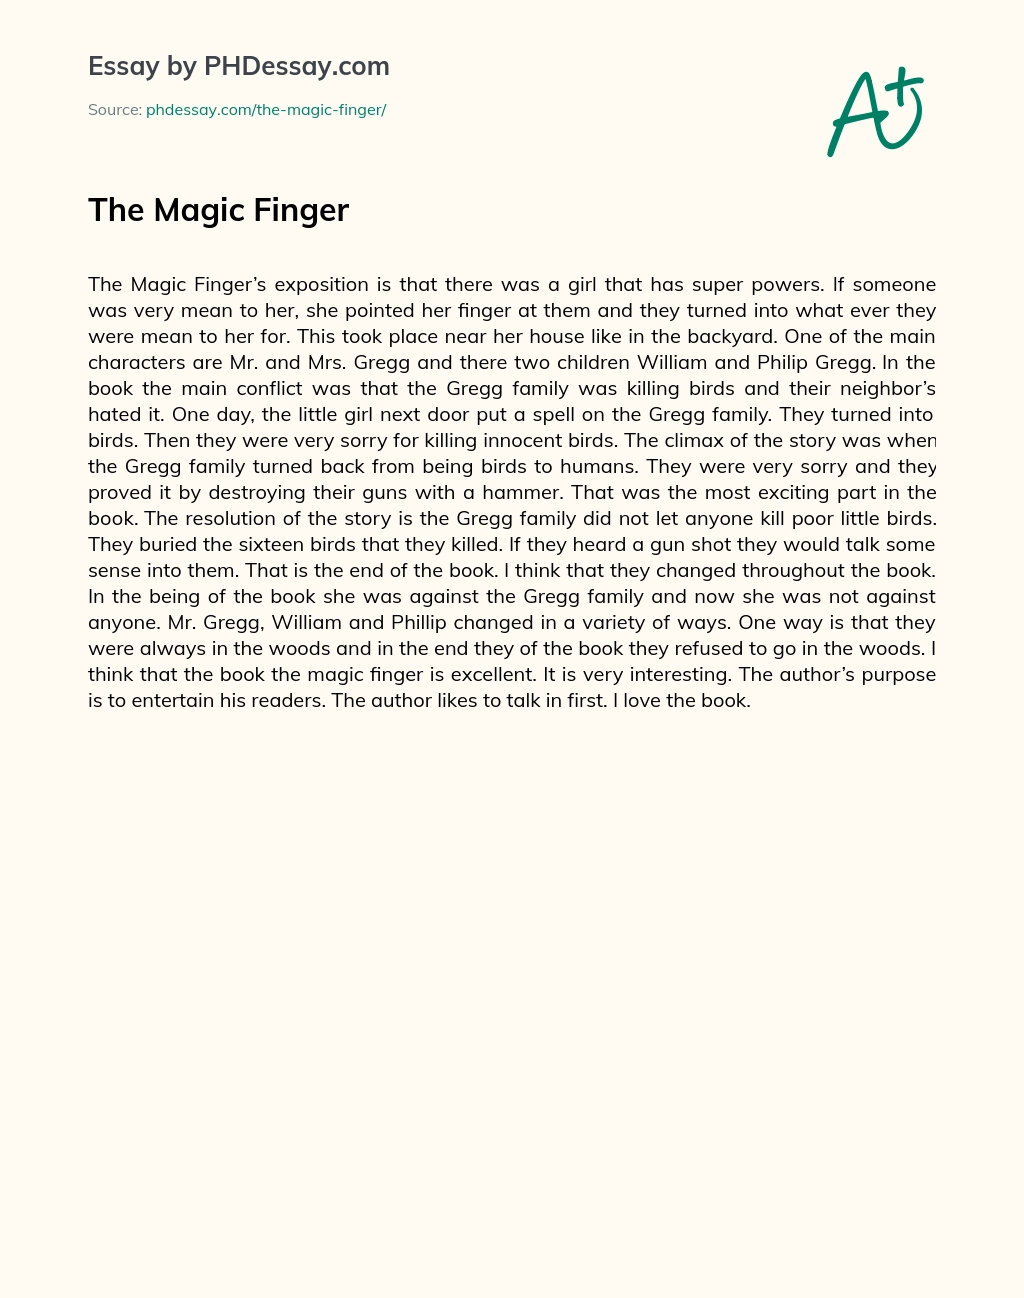 The Magic Finger essay